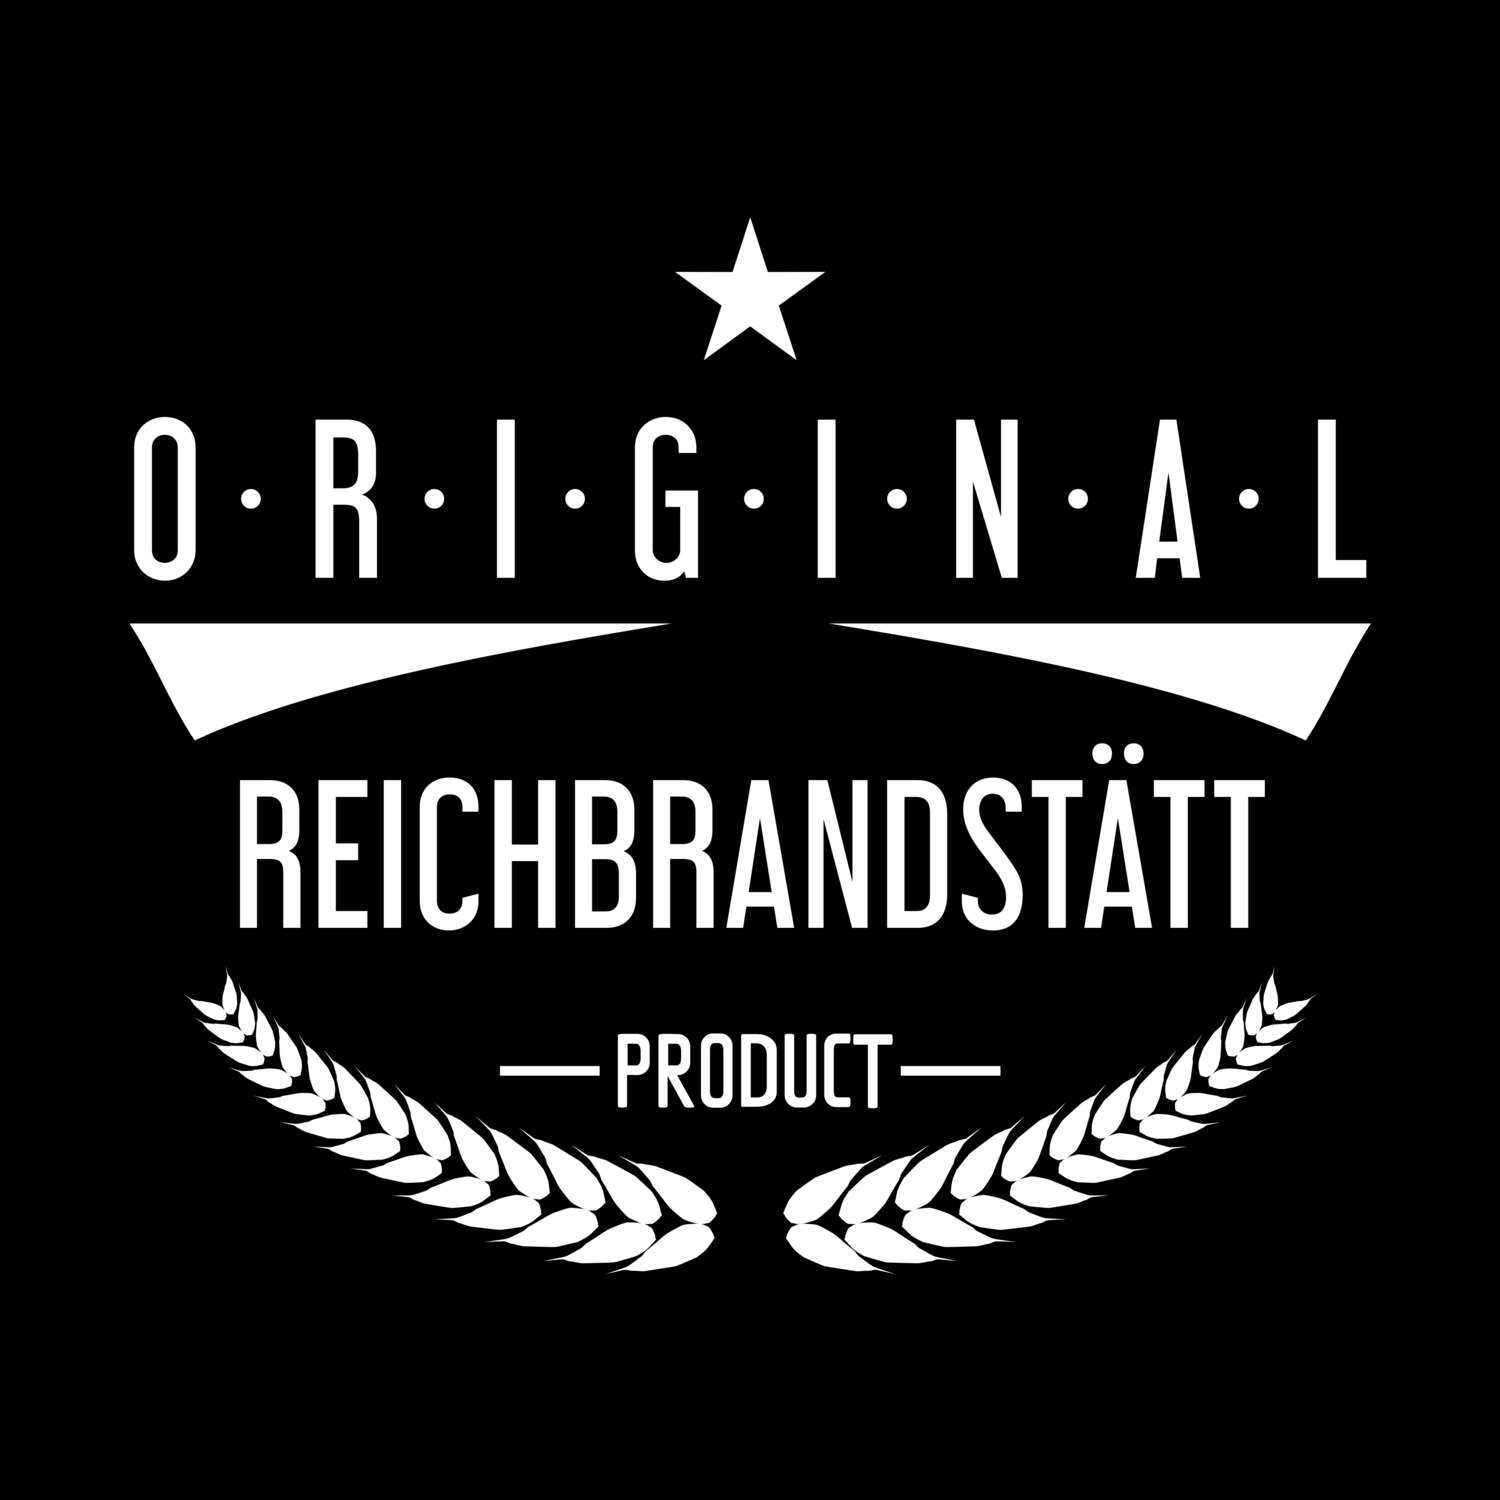 Reichbrandstätt T-Shirt »Original Product«